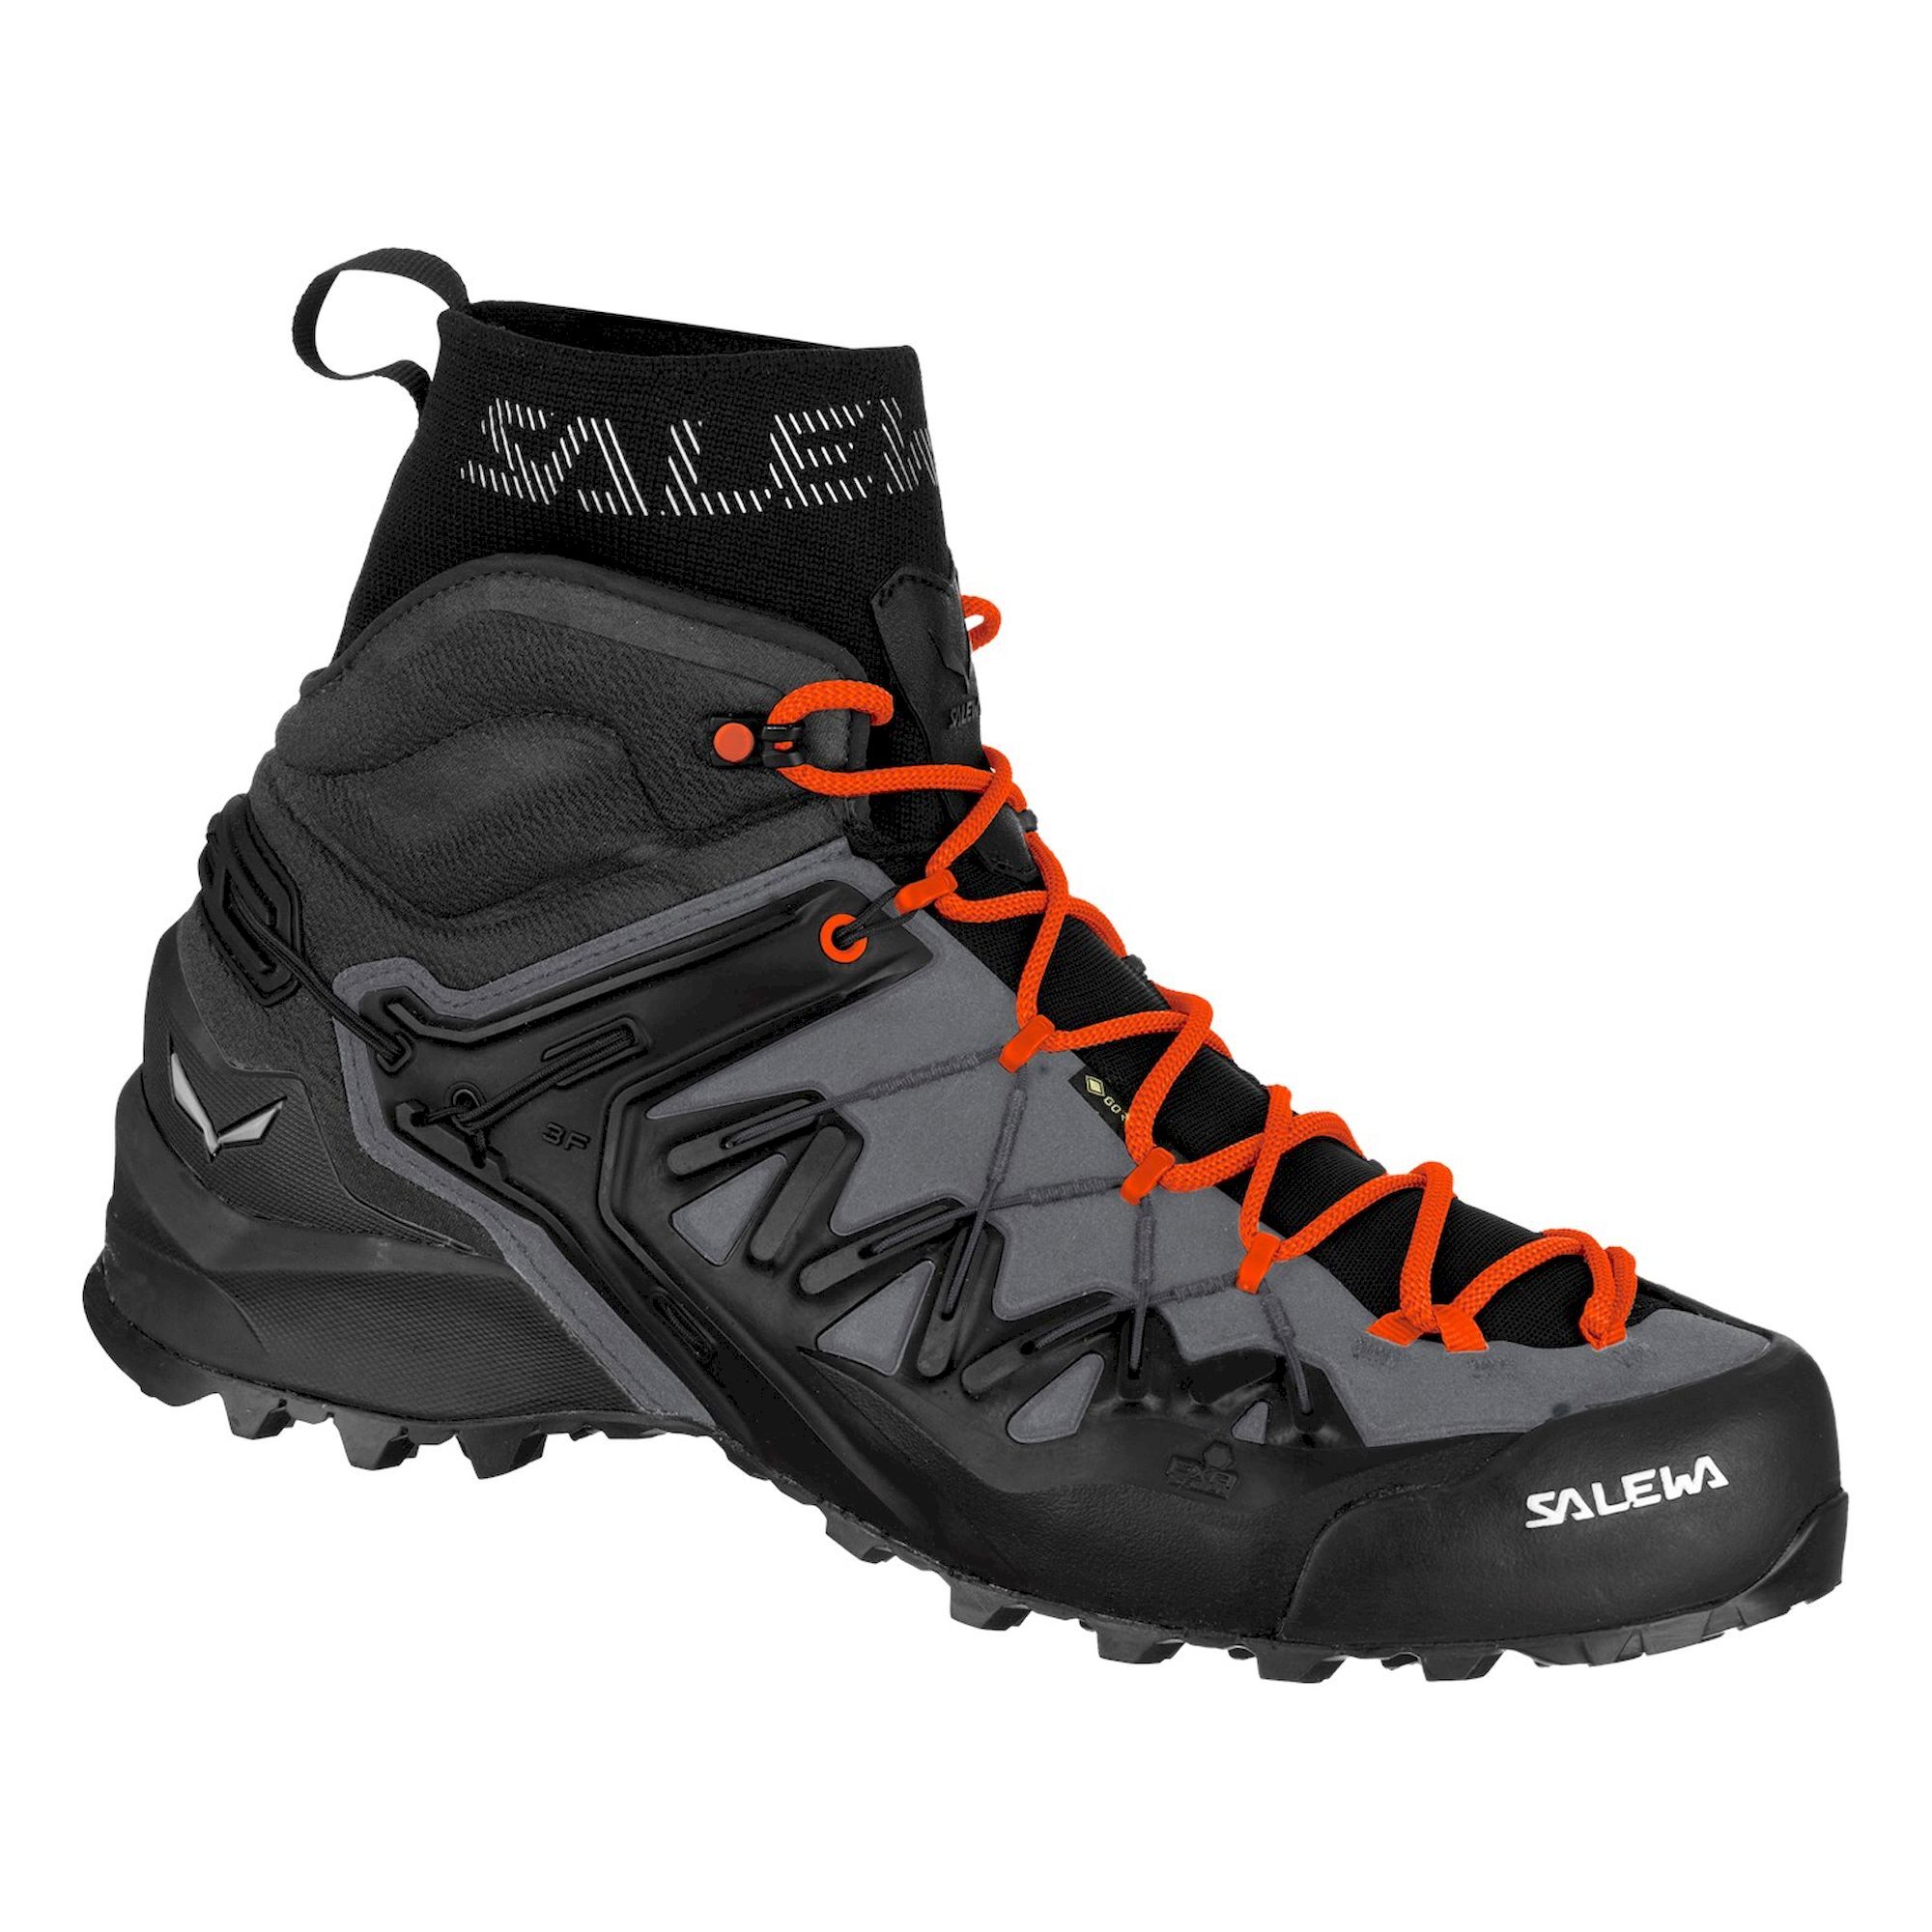 Salewa Wildfire Edge Mid GTX - Approach shoes - Men's